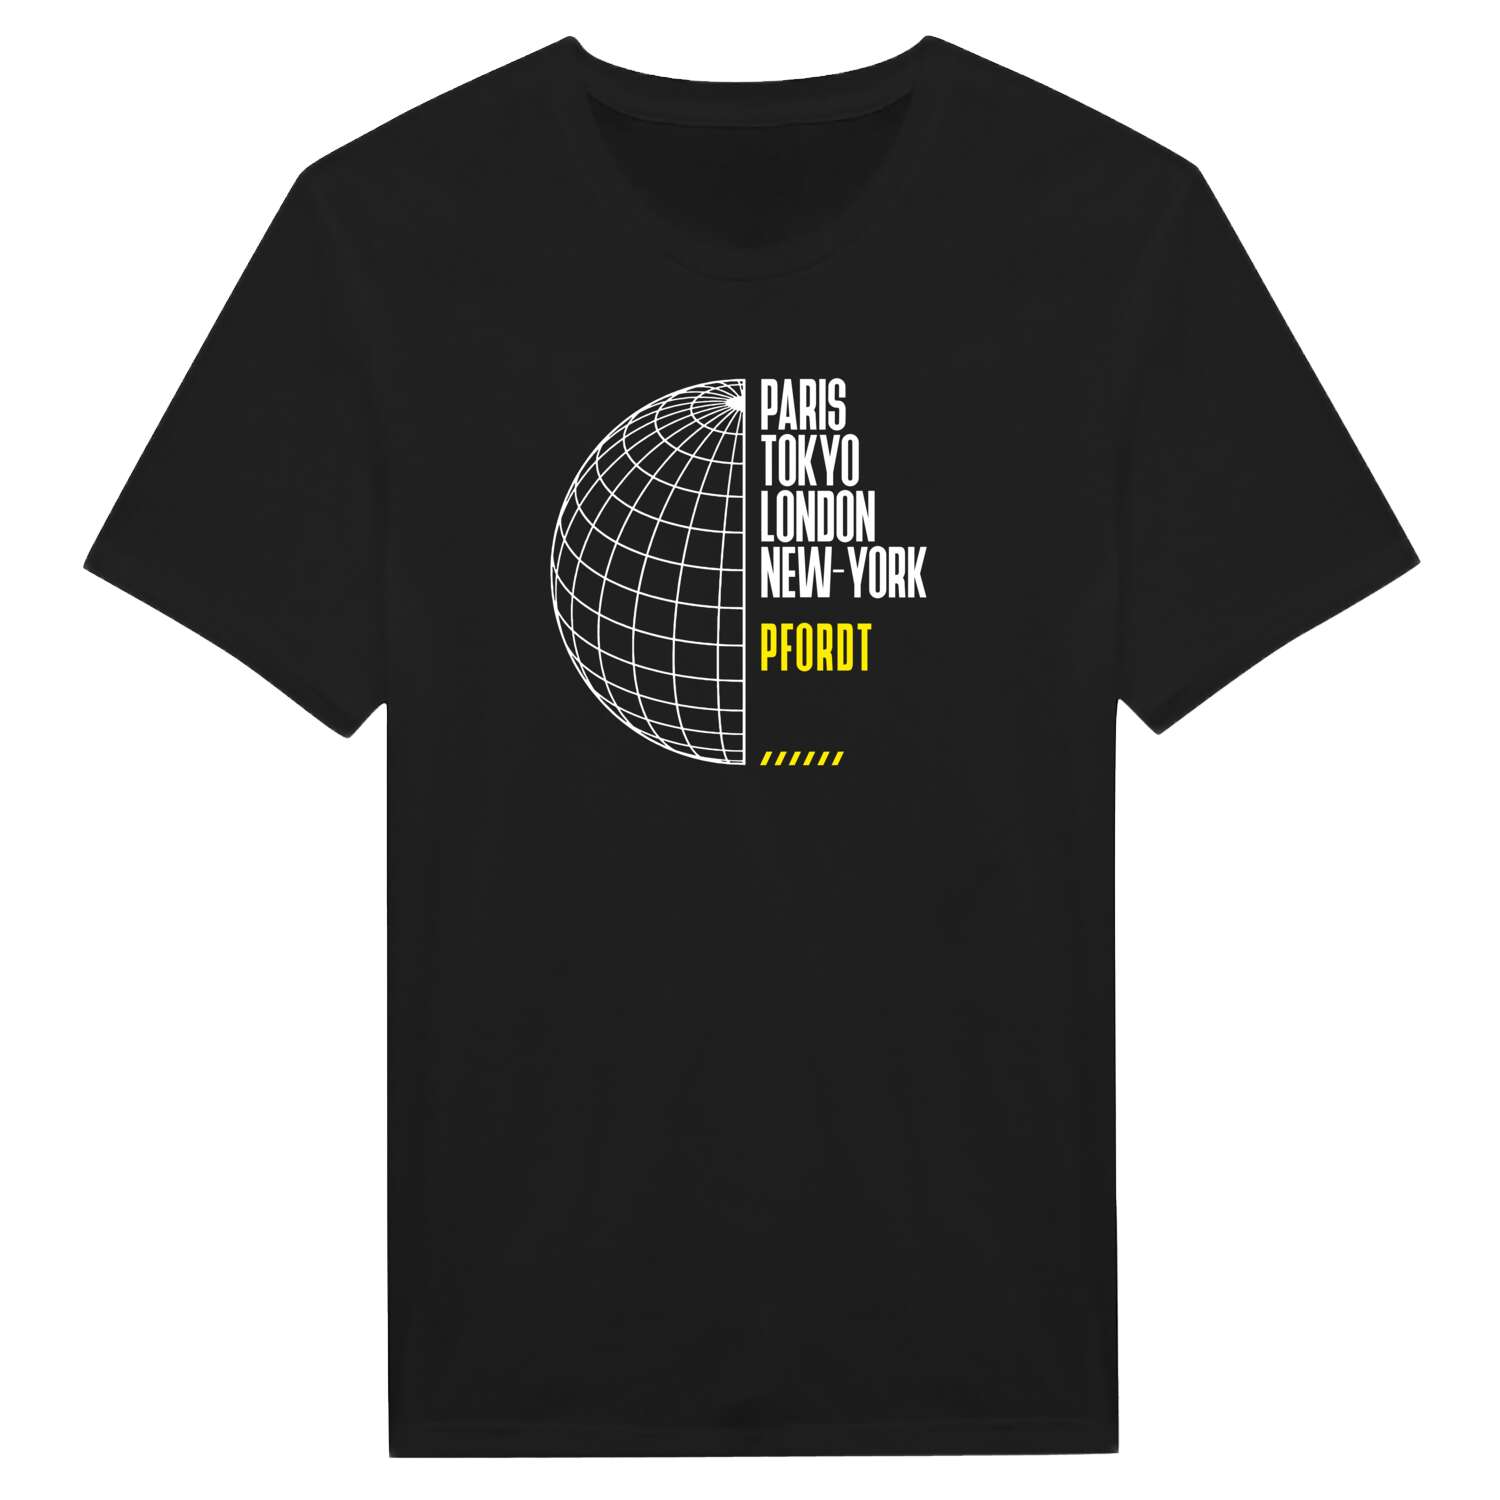 Pfordt T-Shirt »Paris Tokyo London«